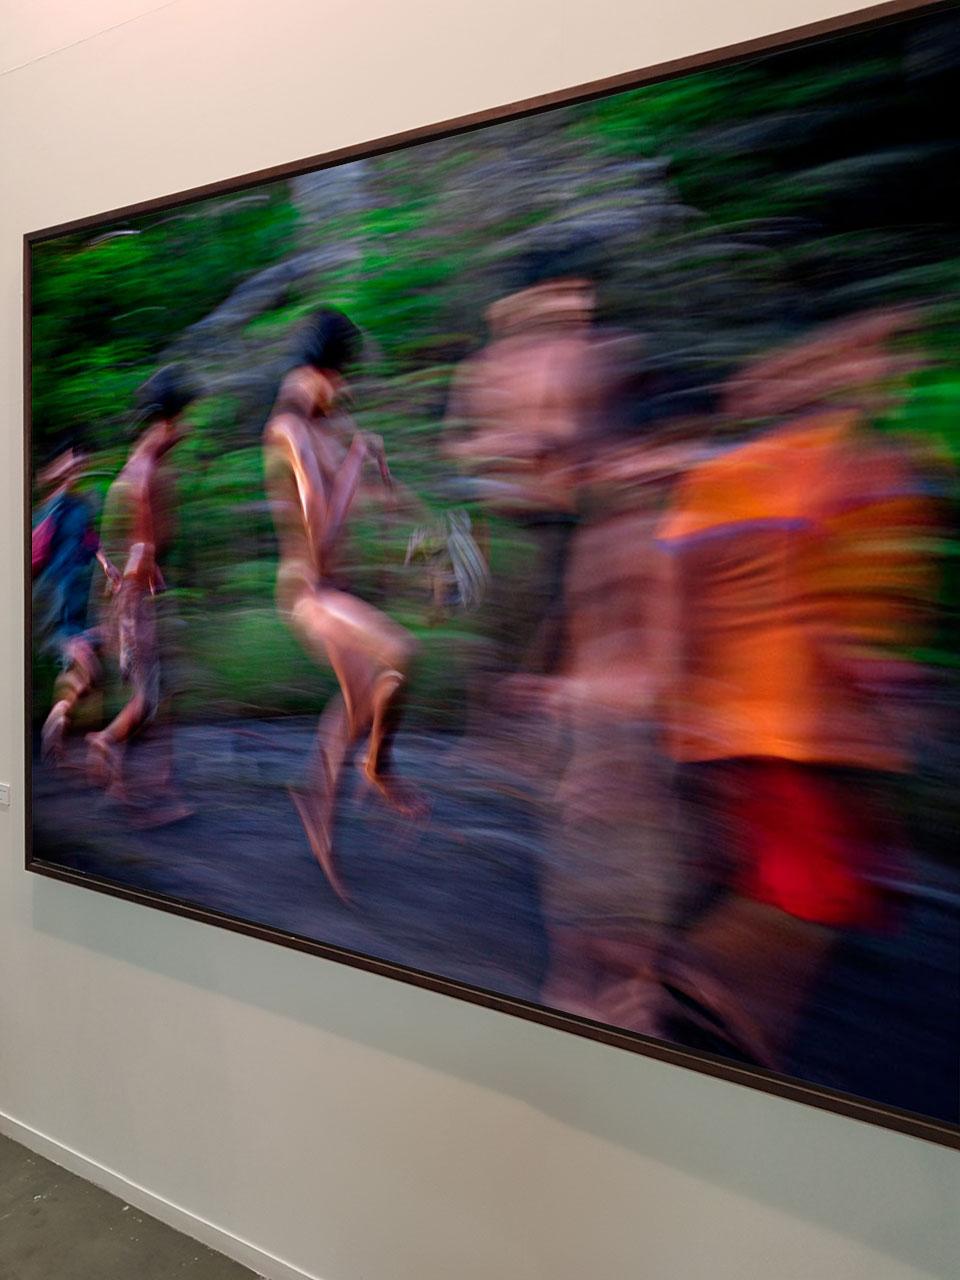 Childhood, Indigenous Tribe, Brazil - Contemporary Photograph by Sergio Ranalli